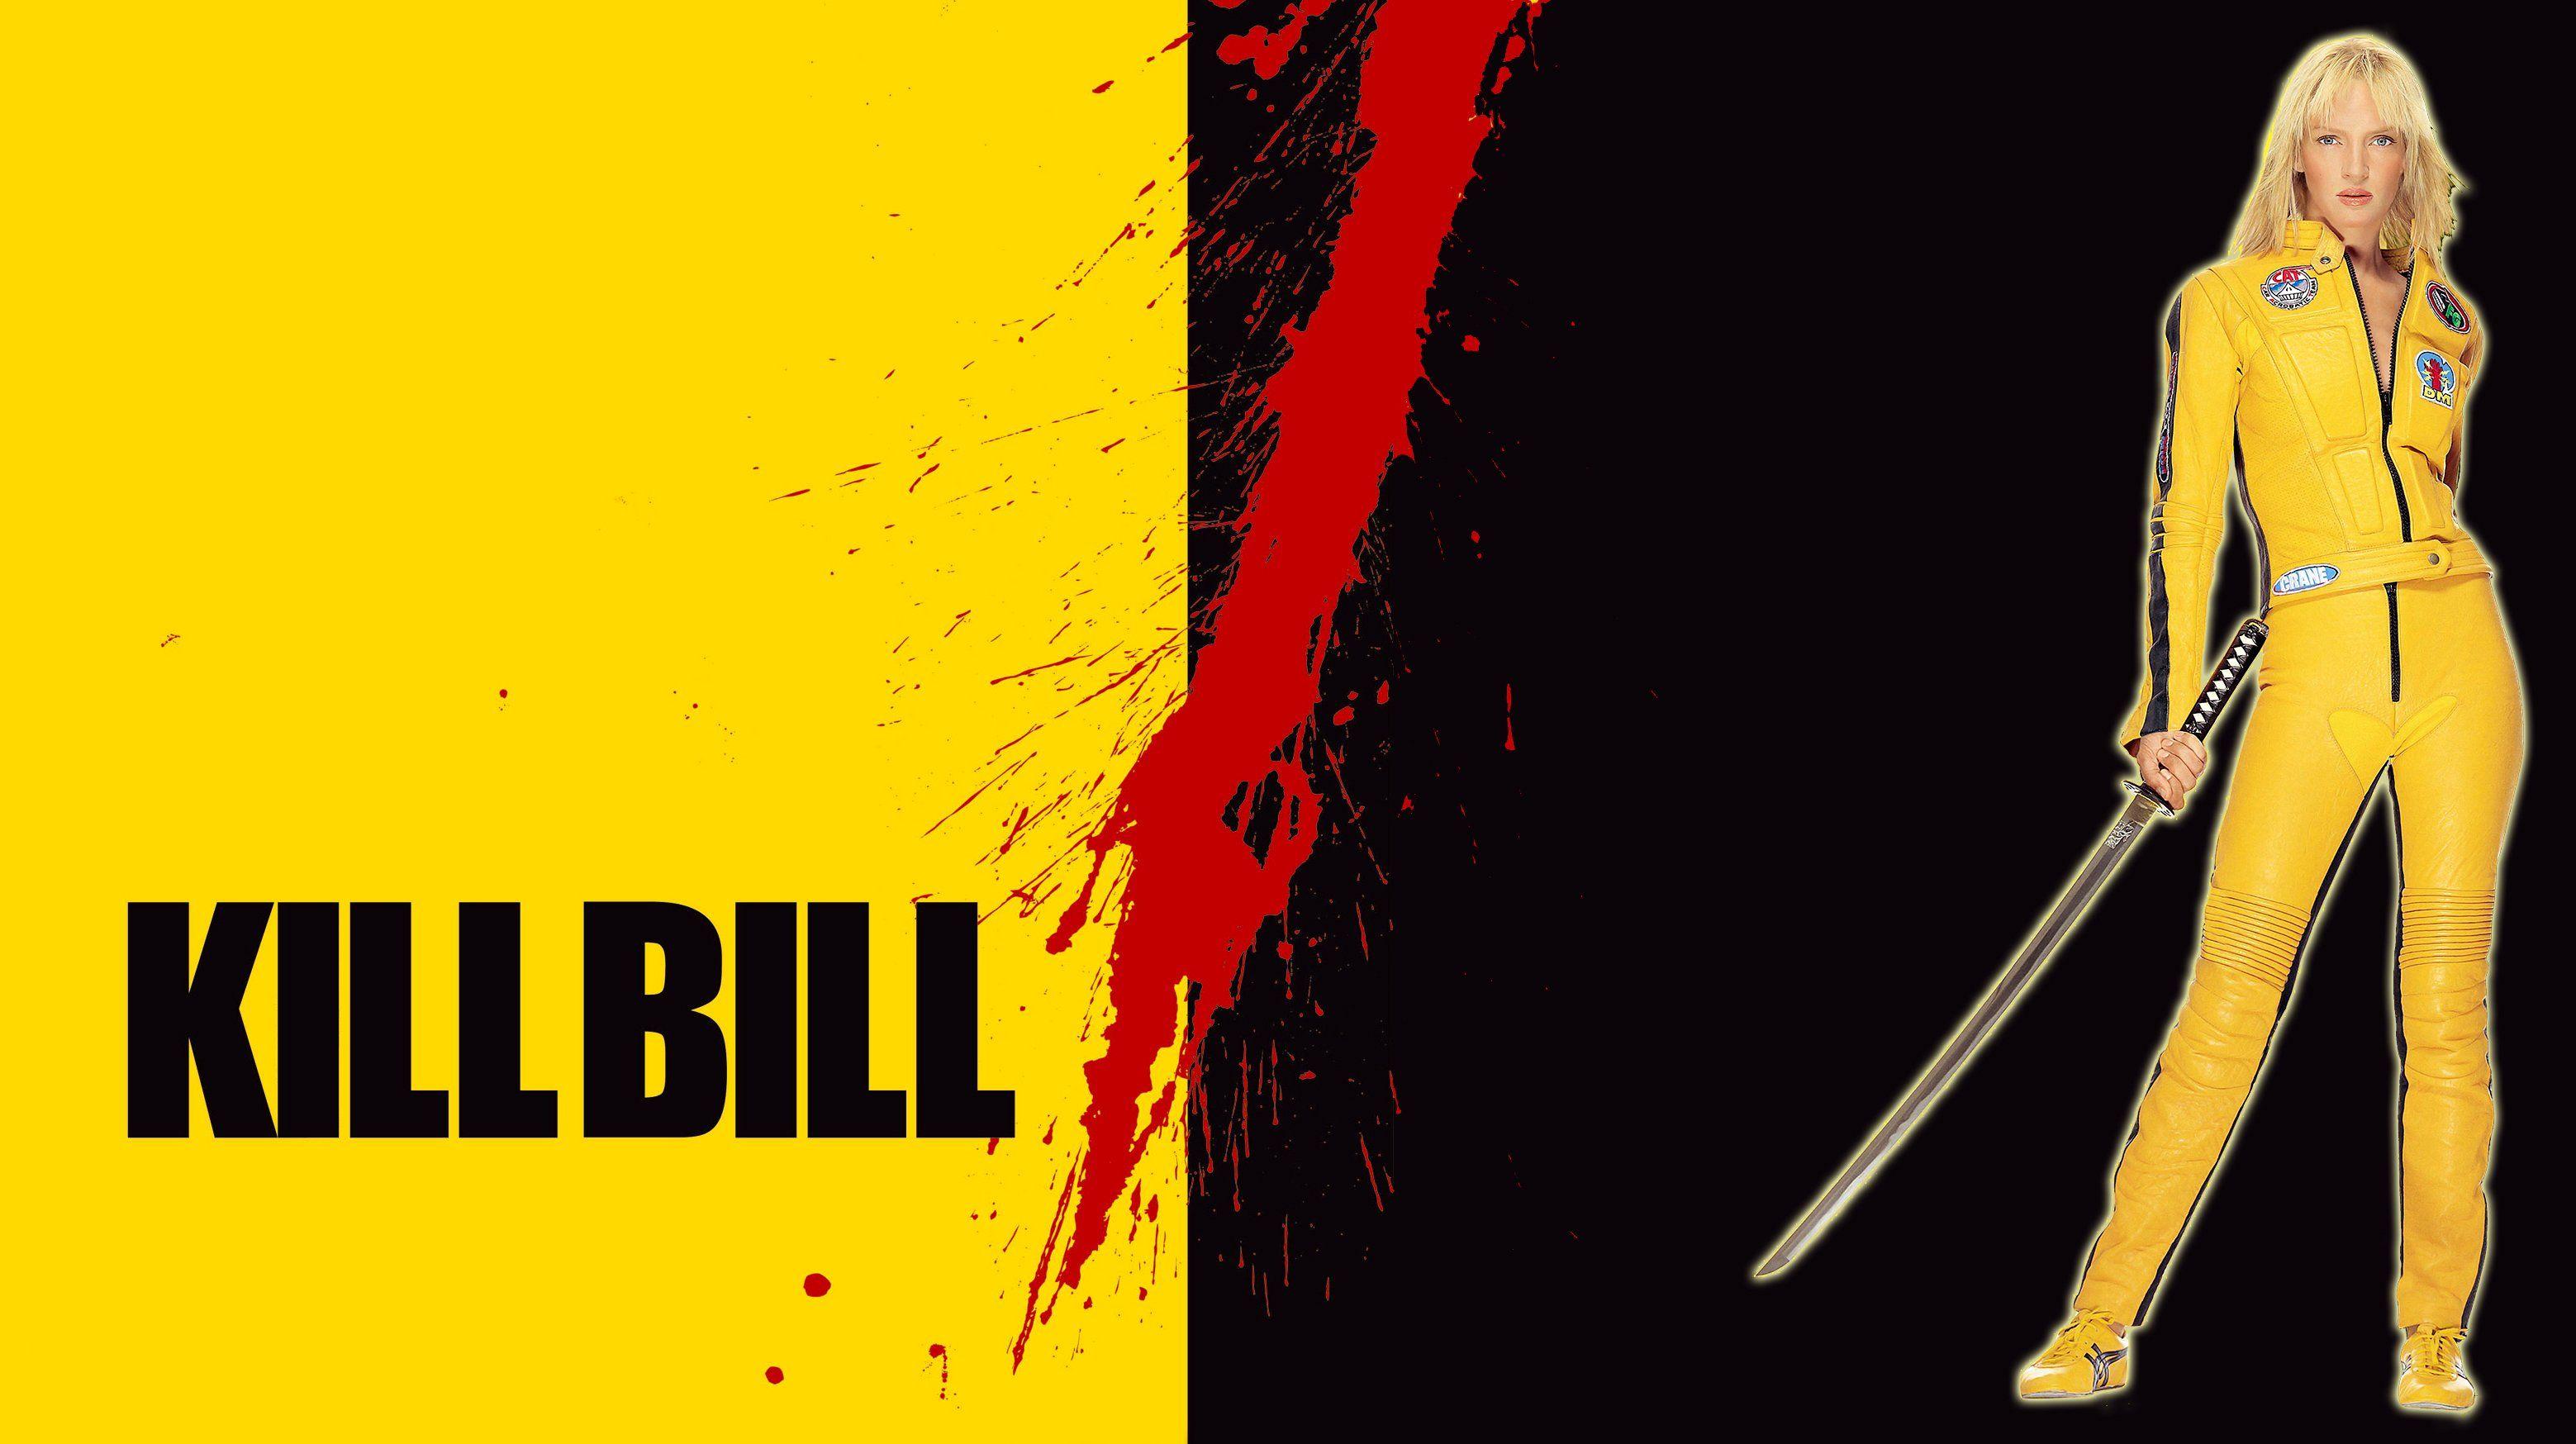 KILL BILL action crime martial arts poster blood g wallpaper